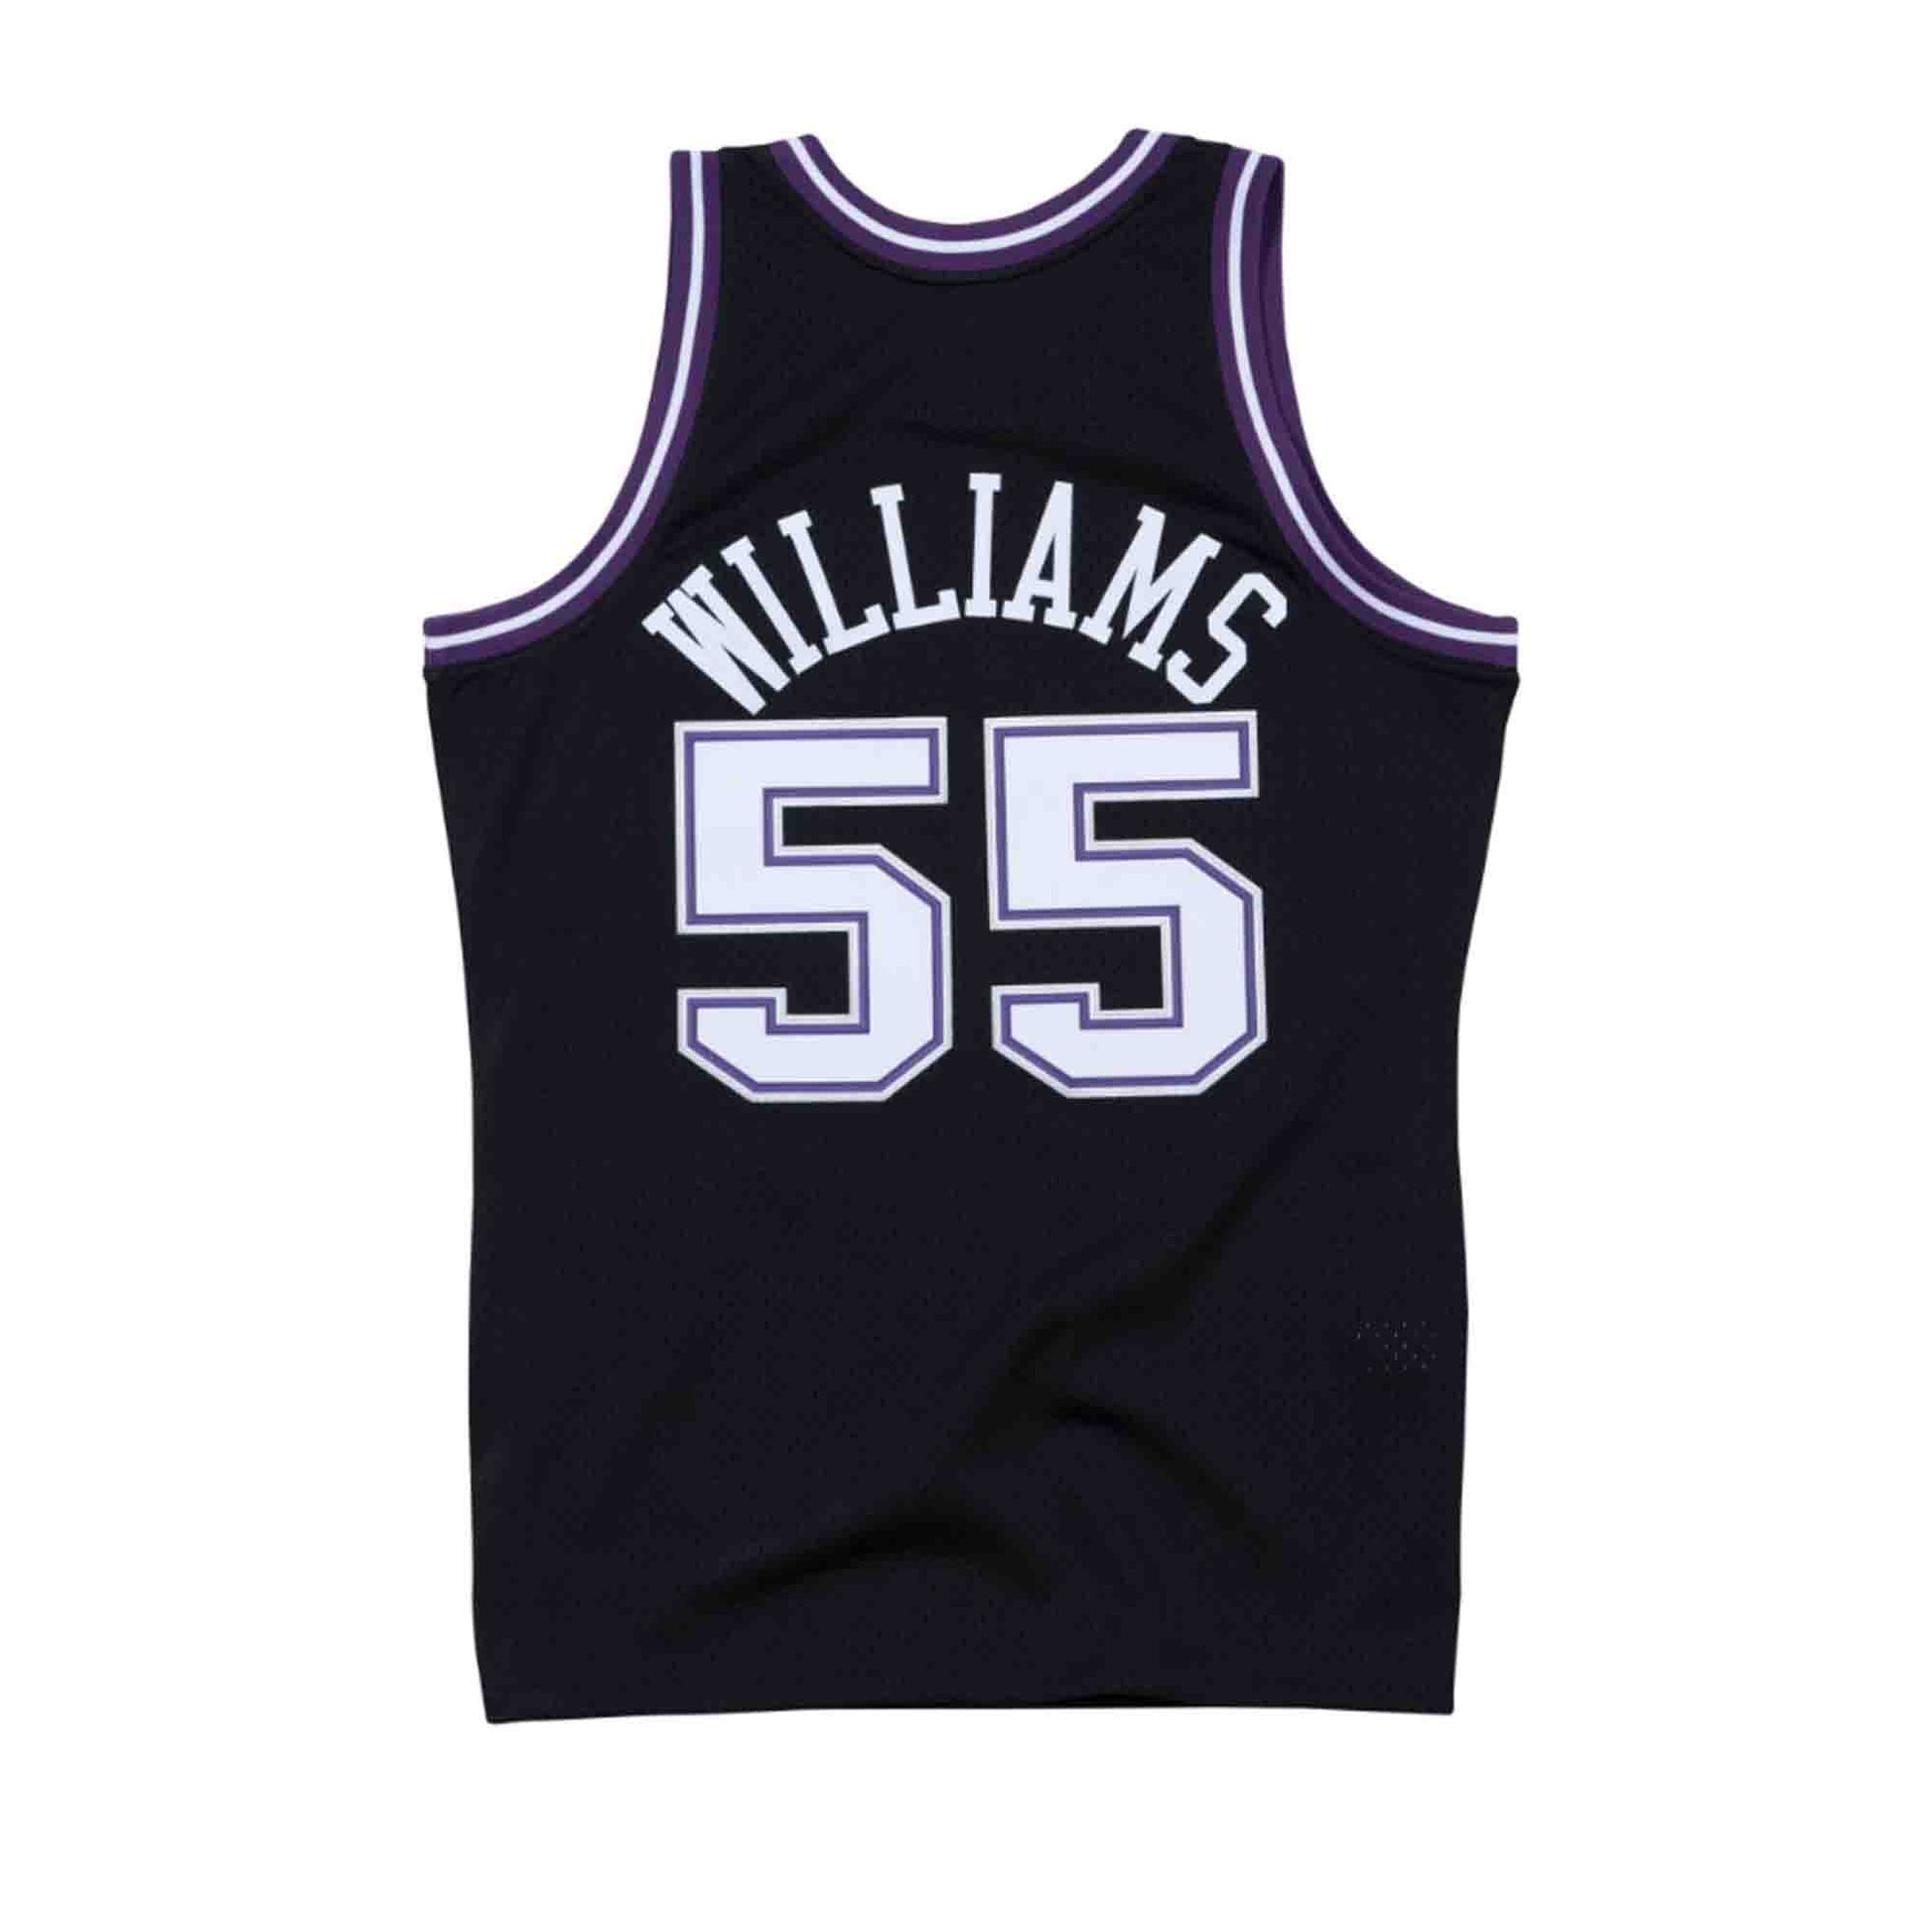 Jason Williams NBA Jerseys, NBA Jersey, NBA Uniforms